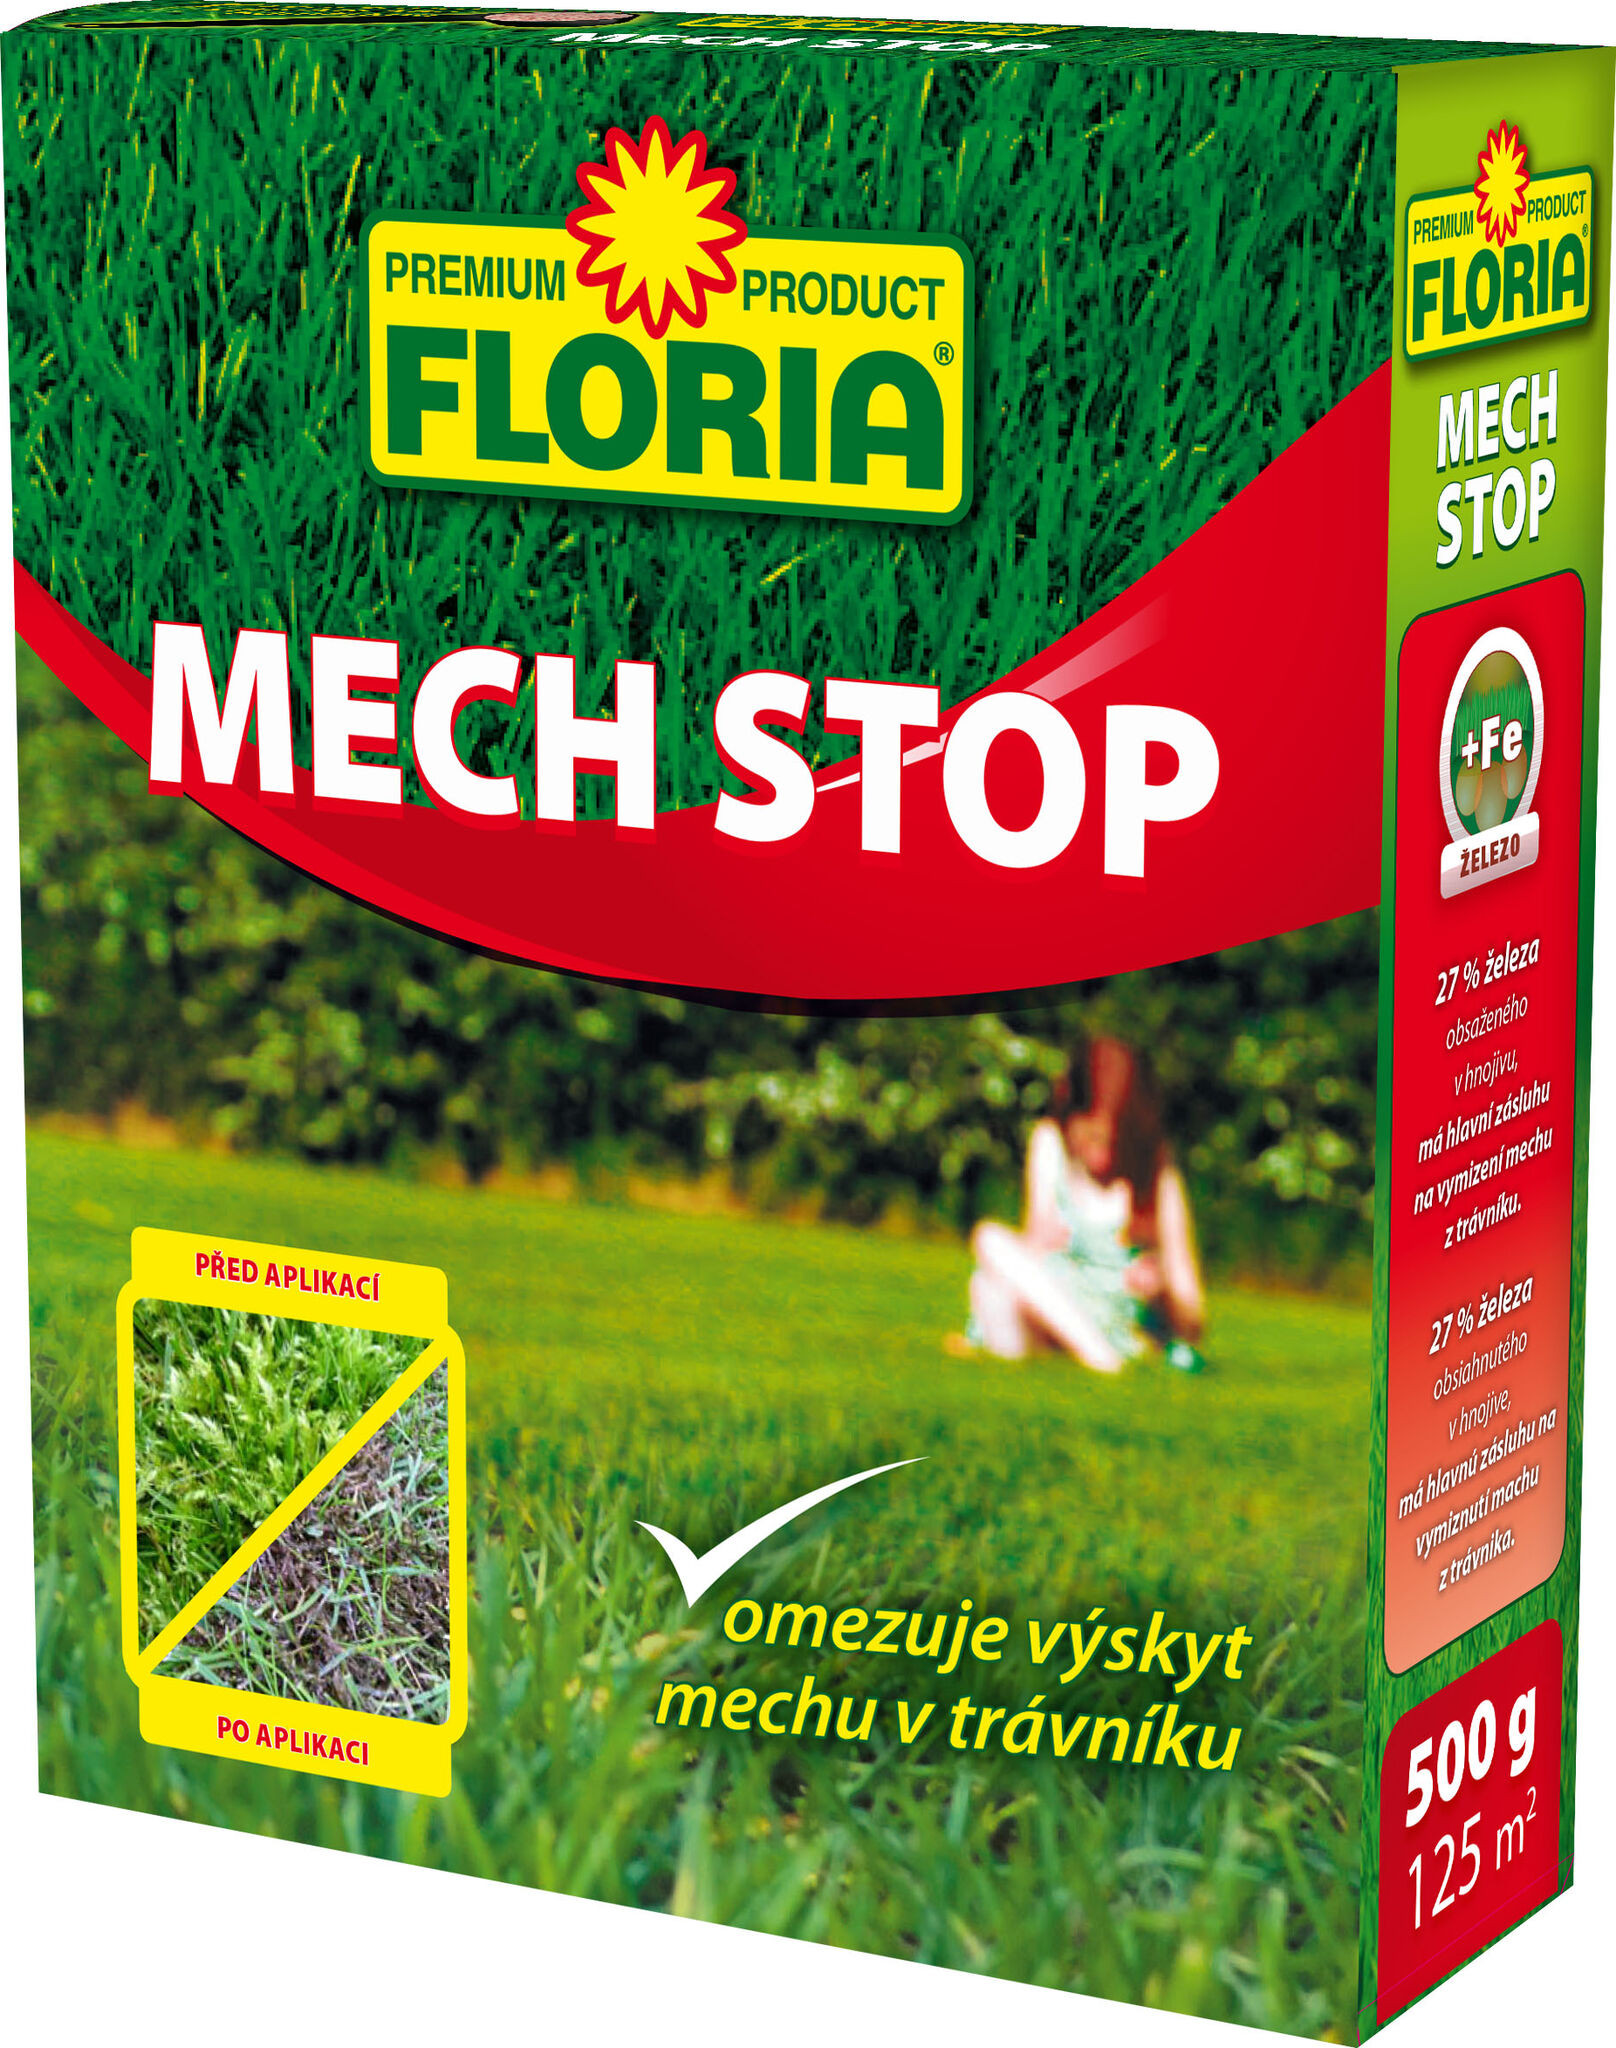 Trávníkové hnojivo Foria STOP MECHU, balení 0.5 kg skladem | ZAZUMi.cz